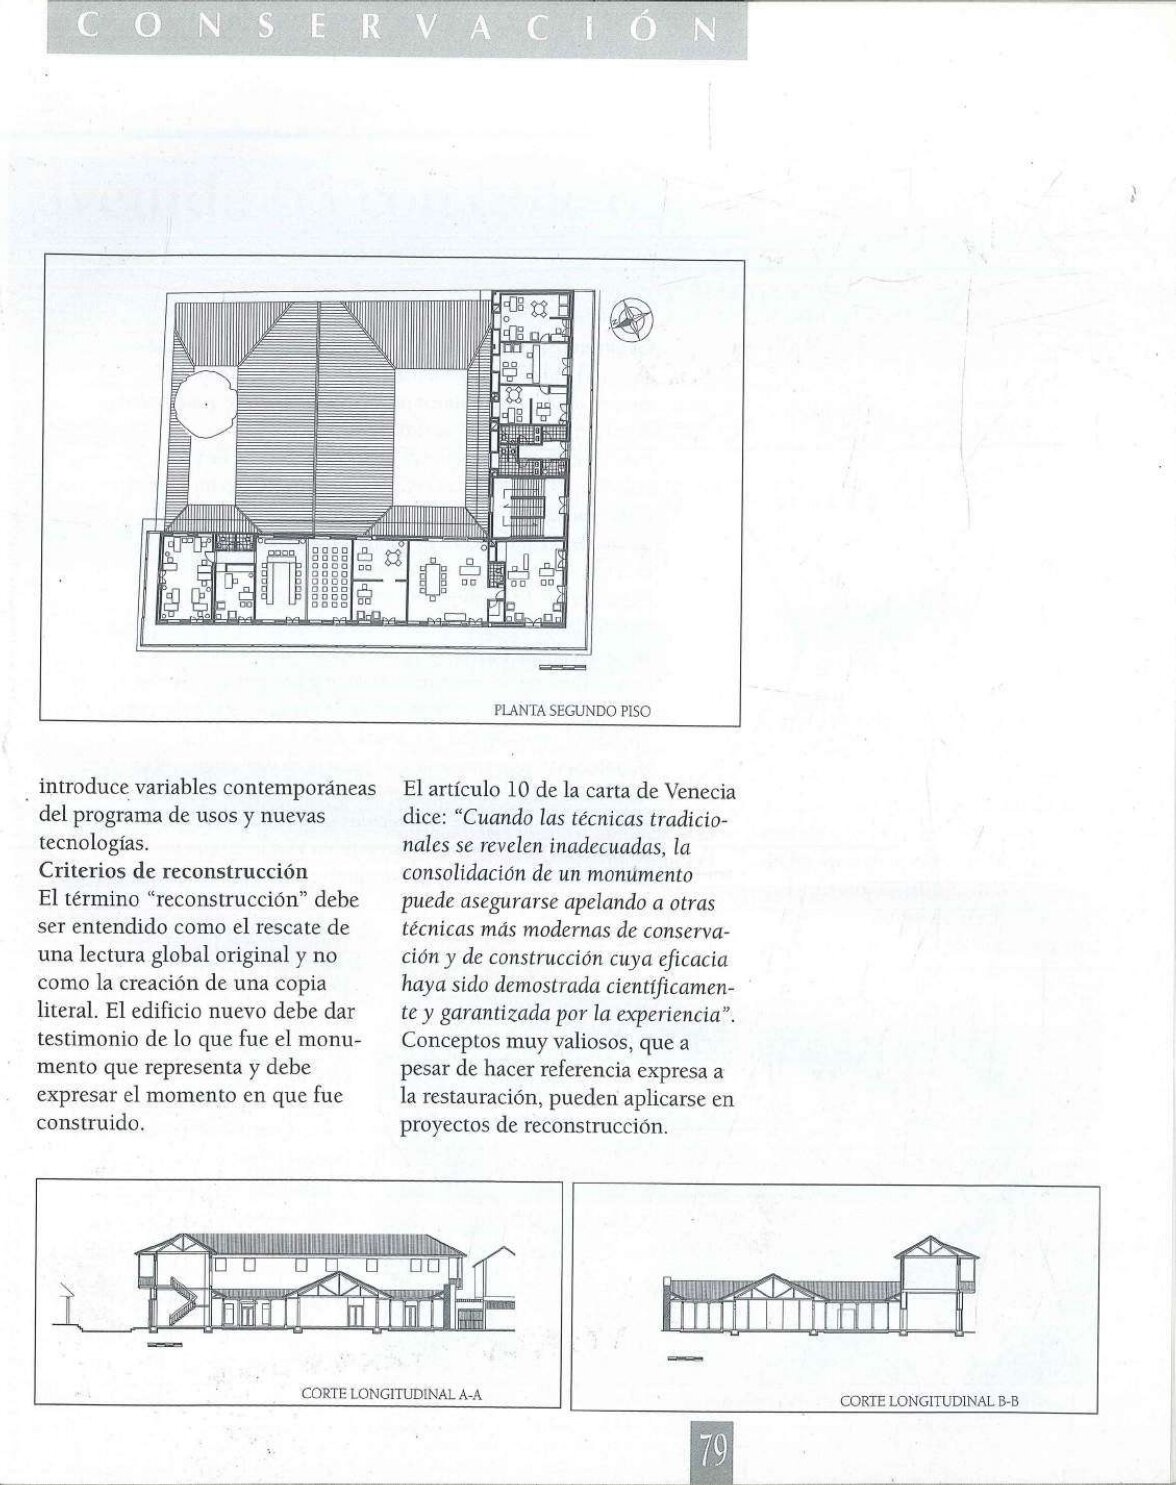 2002_Contexto Urbano- Obra reciente 1995-2002. REVISTA PROA 1_compressed (1)_page-0081.jpg